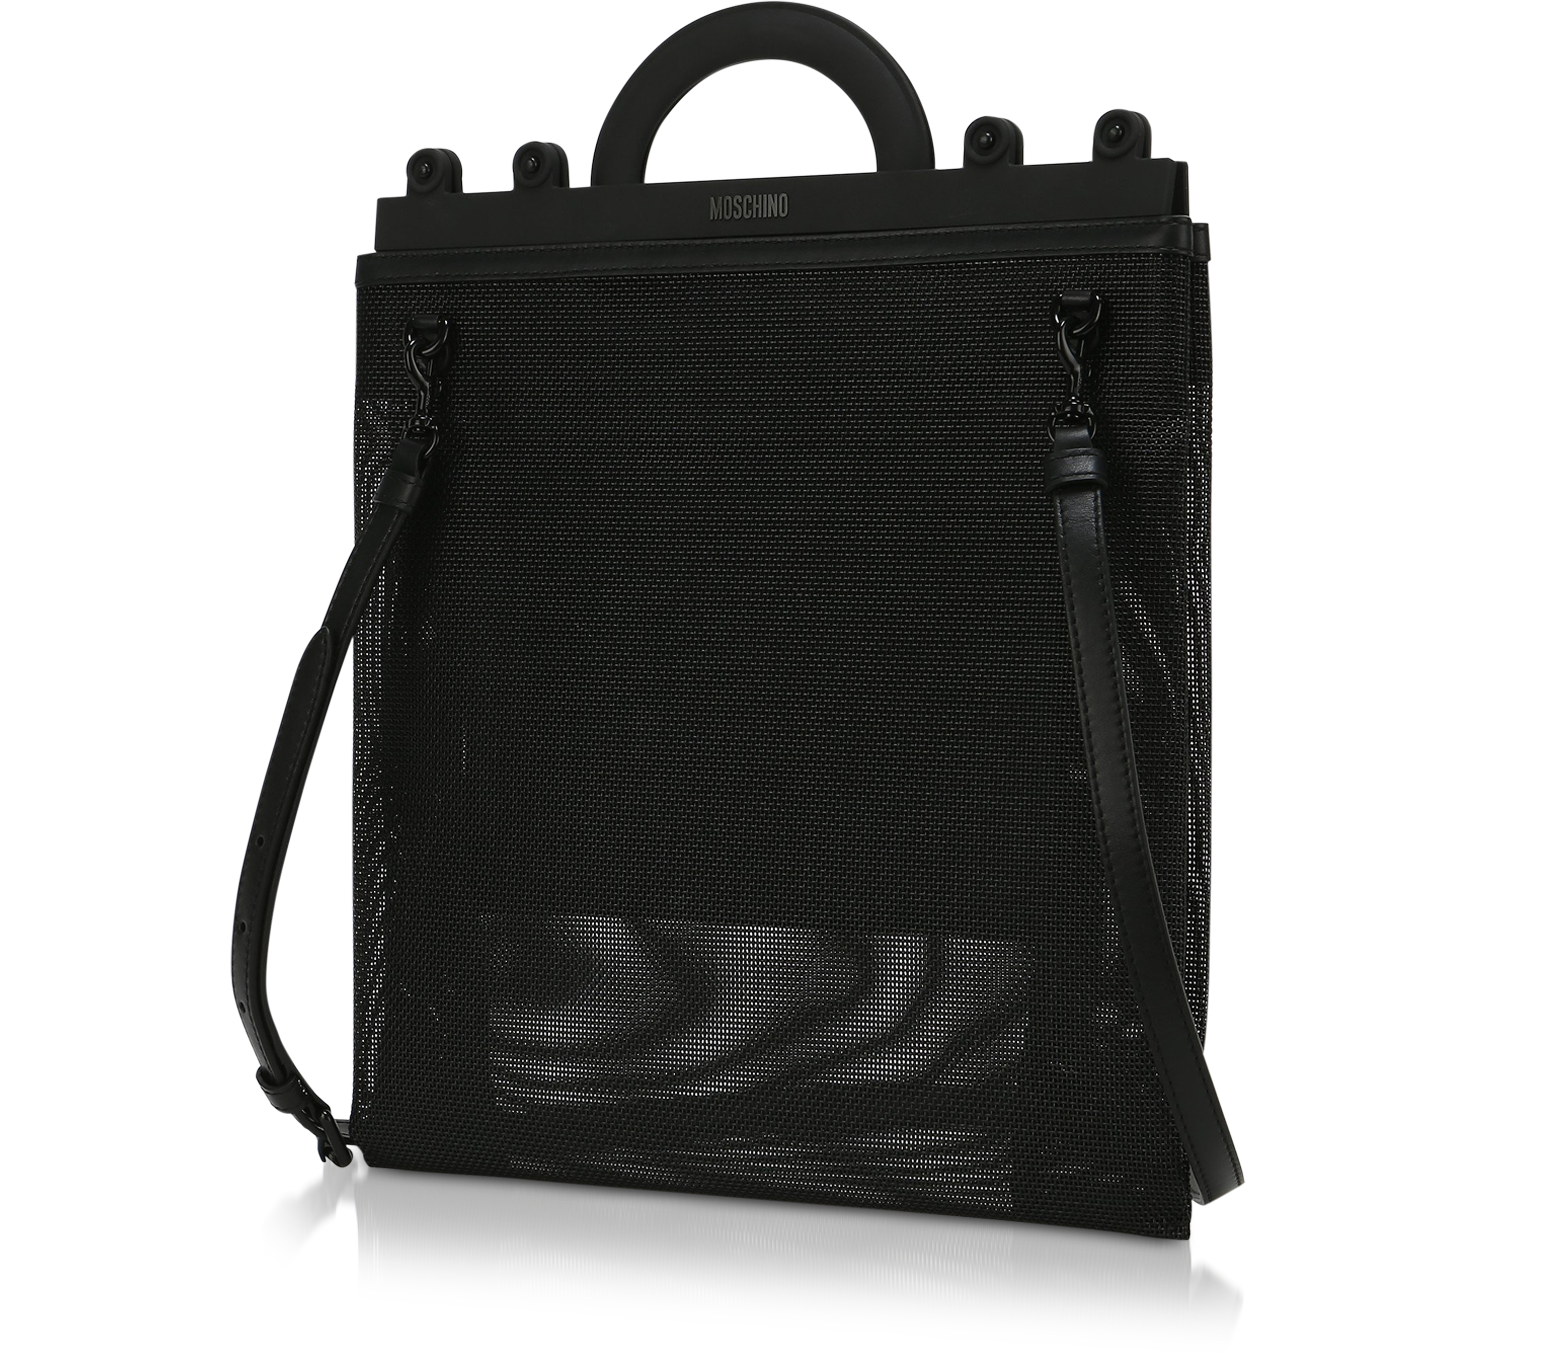 Black Printed shopper bag Moschino - Vitkac Canada